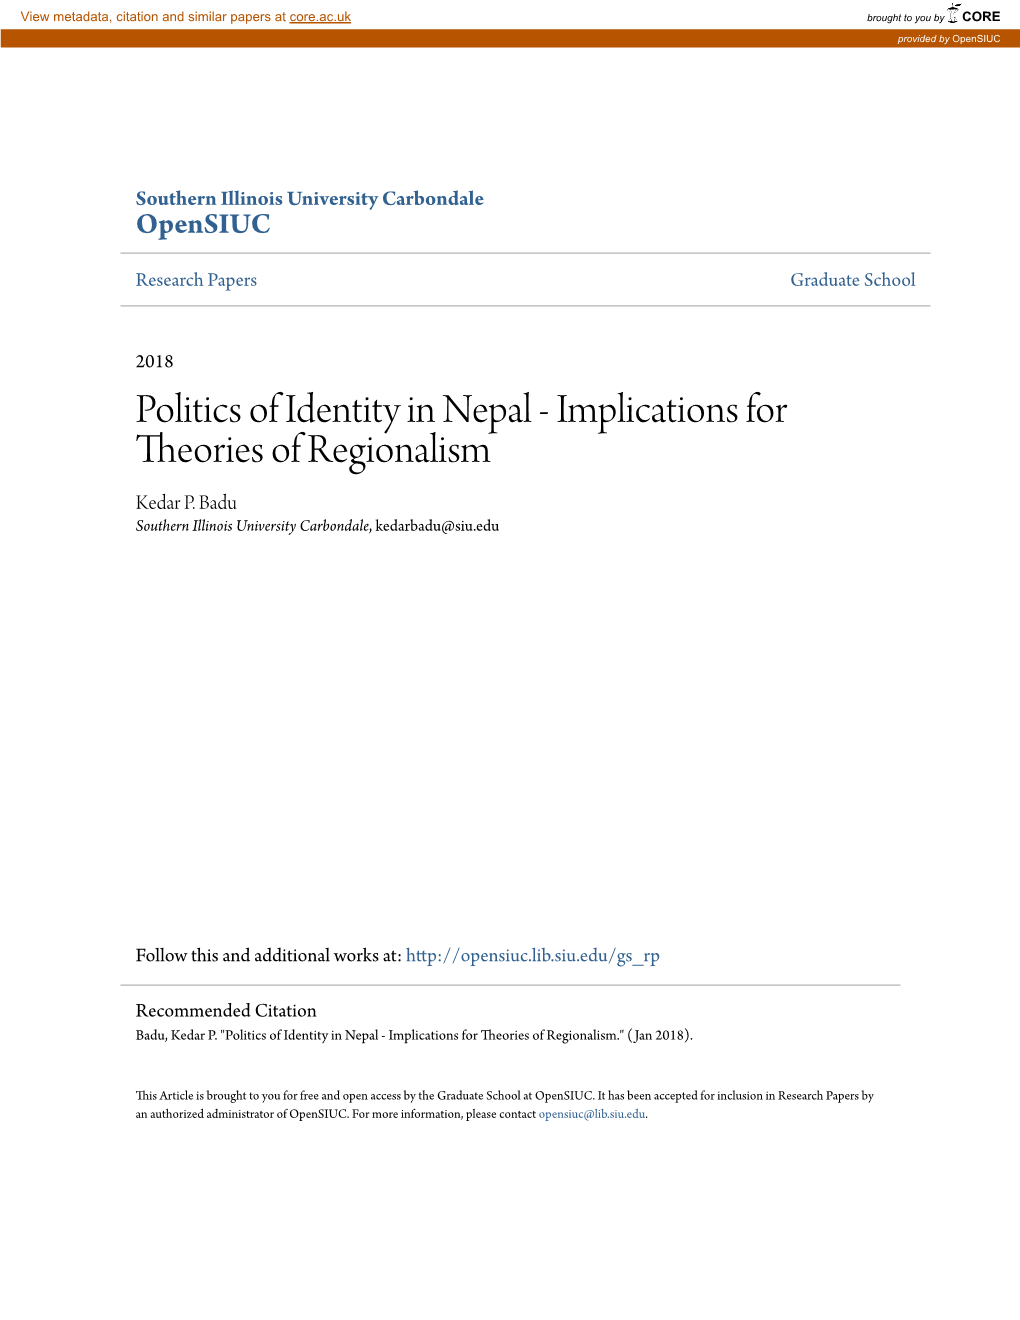 Politics of Identity in Nepal - Implications for Theories of Regionalism Kedar P